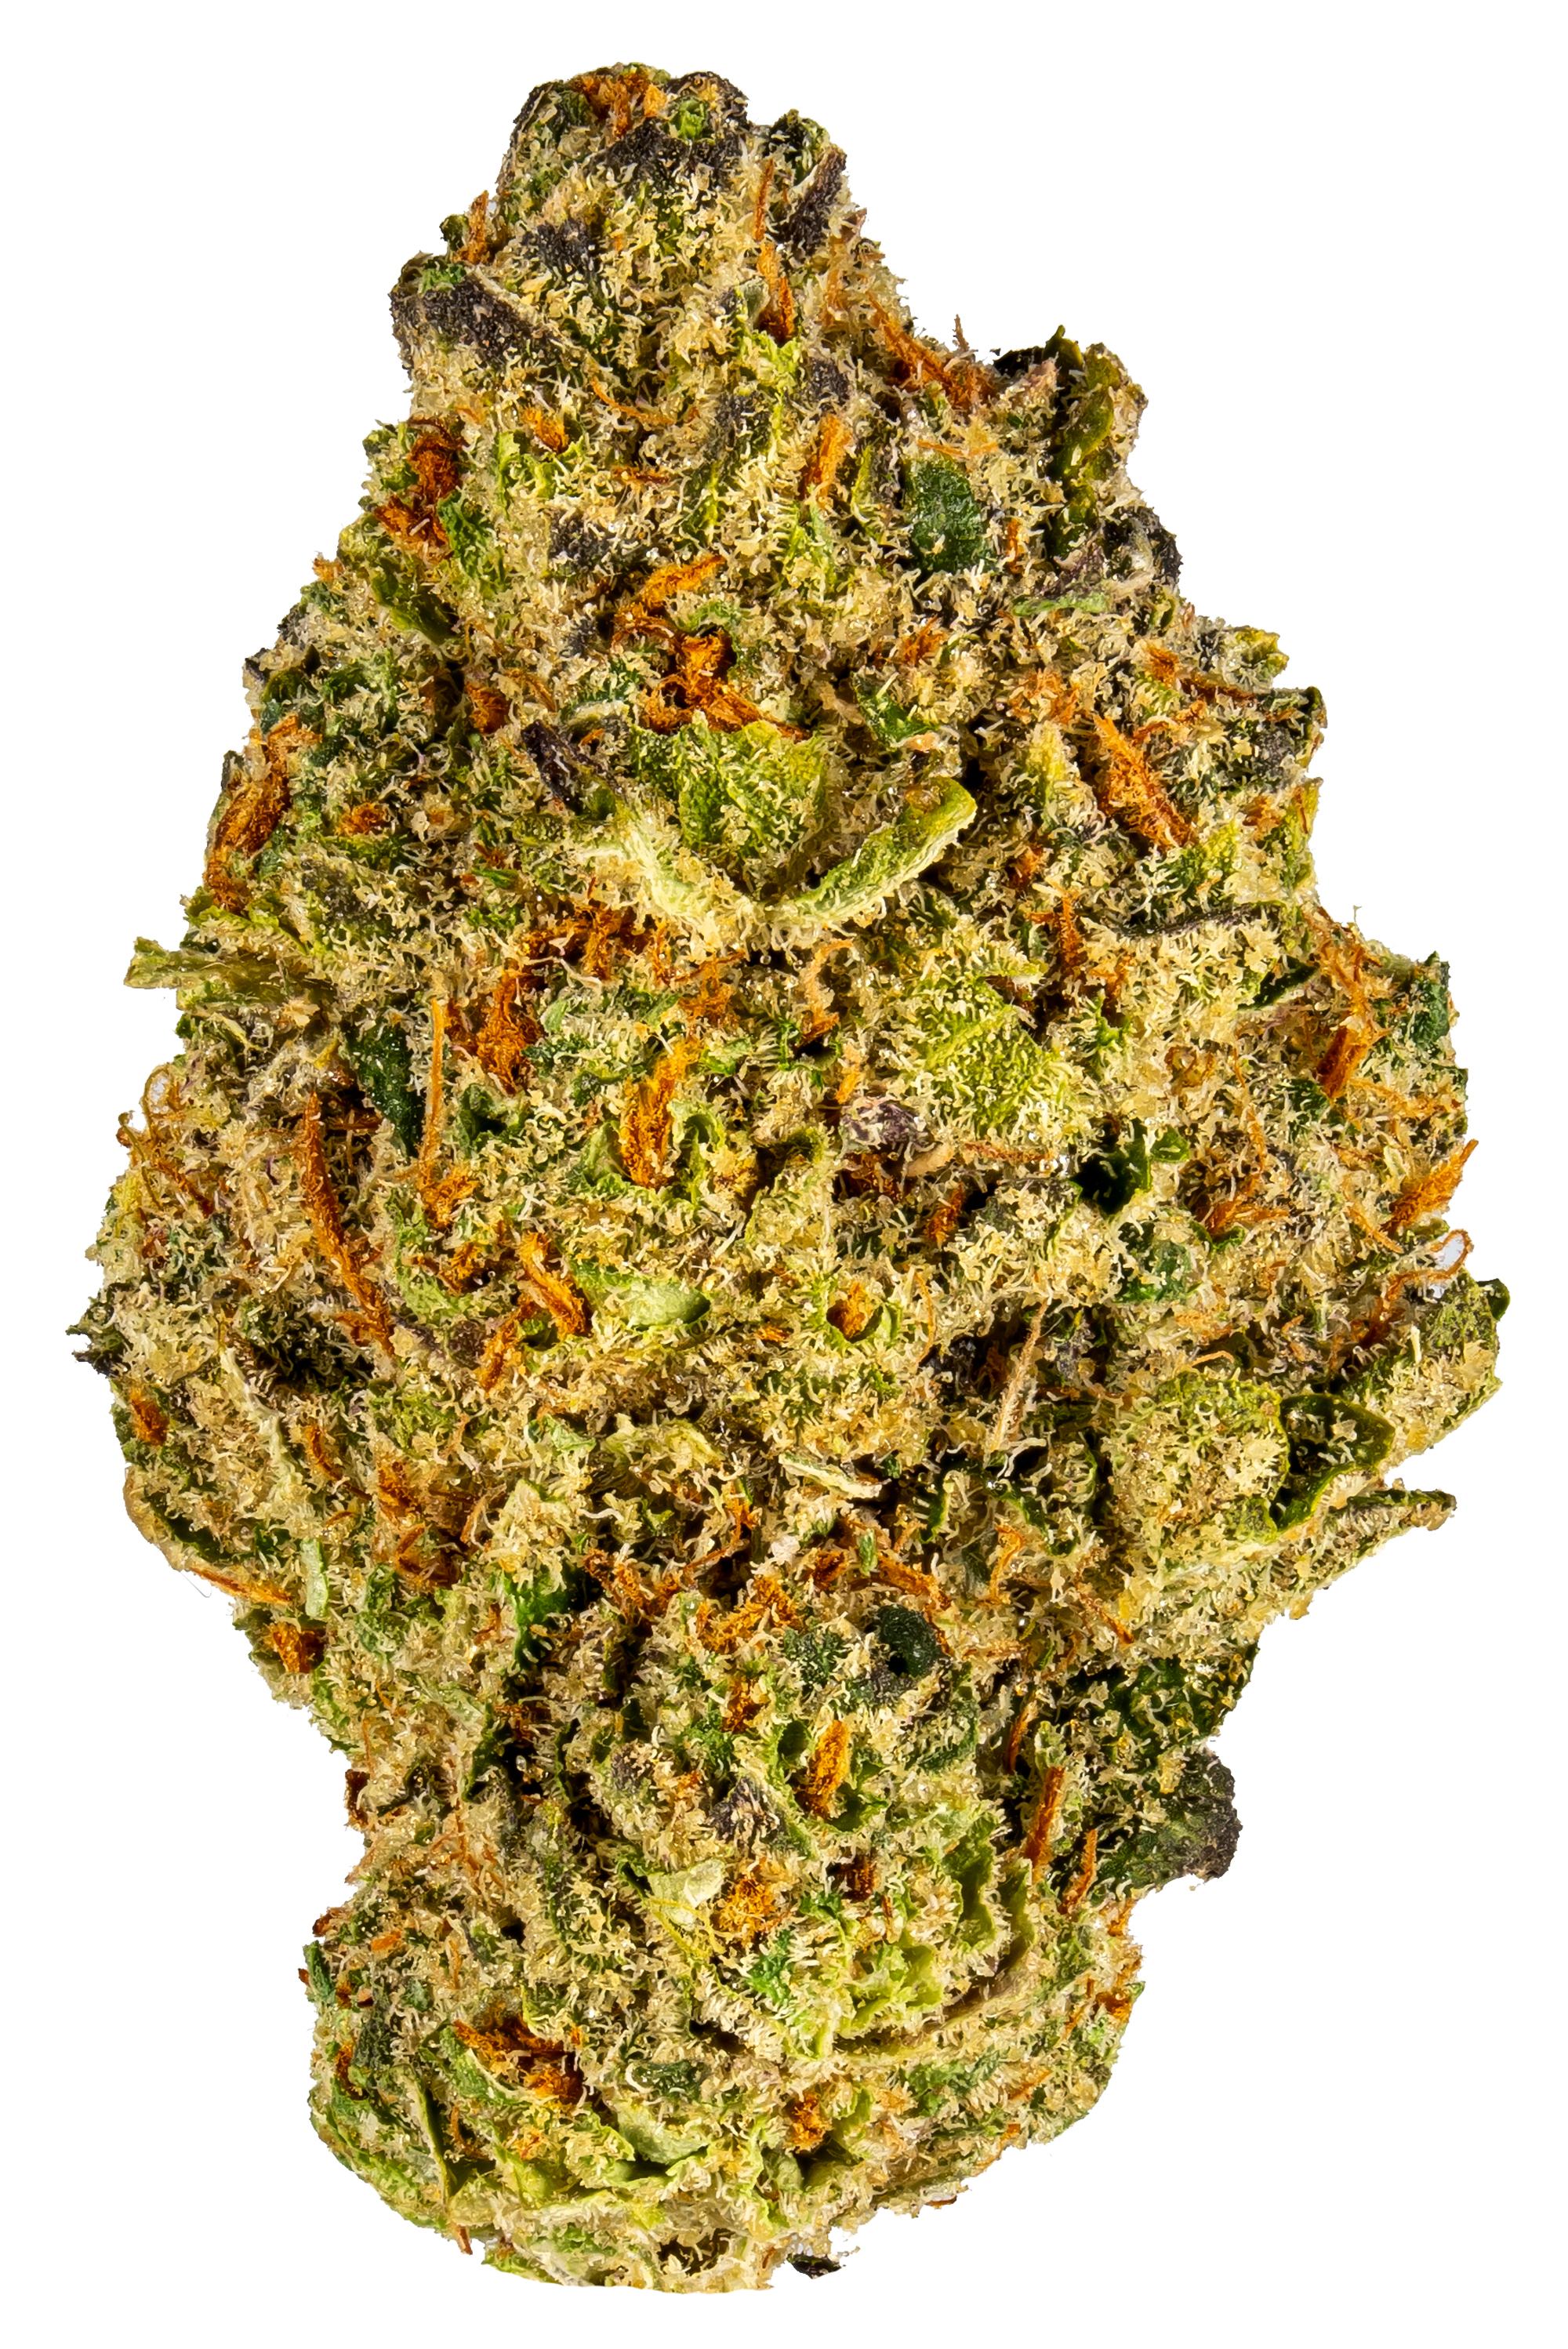 Dosido 9 by Phoenix Cannabis Co- The Cannabis Cactus